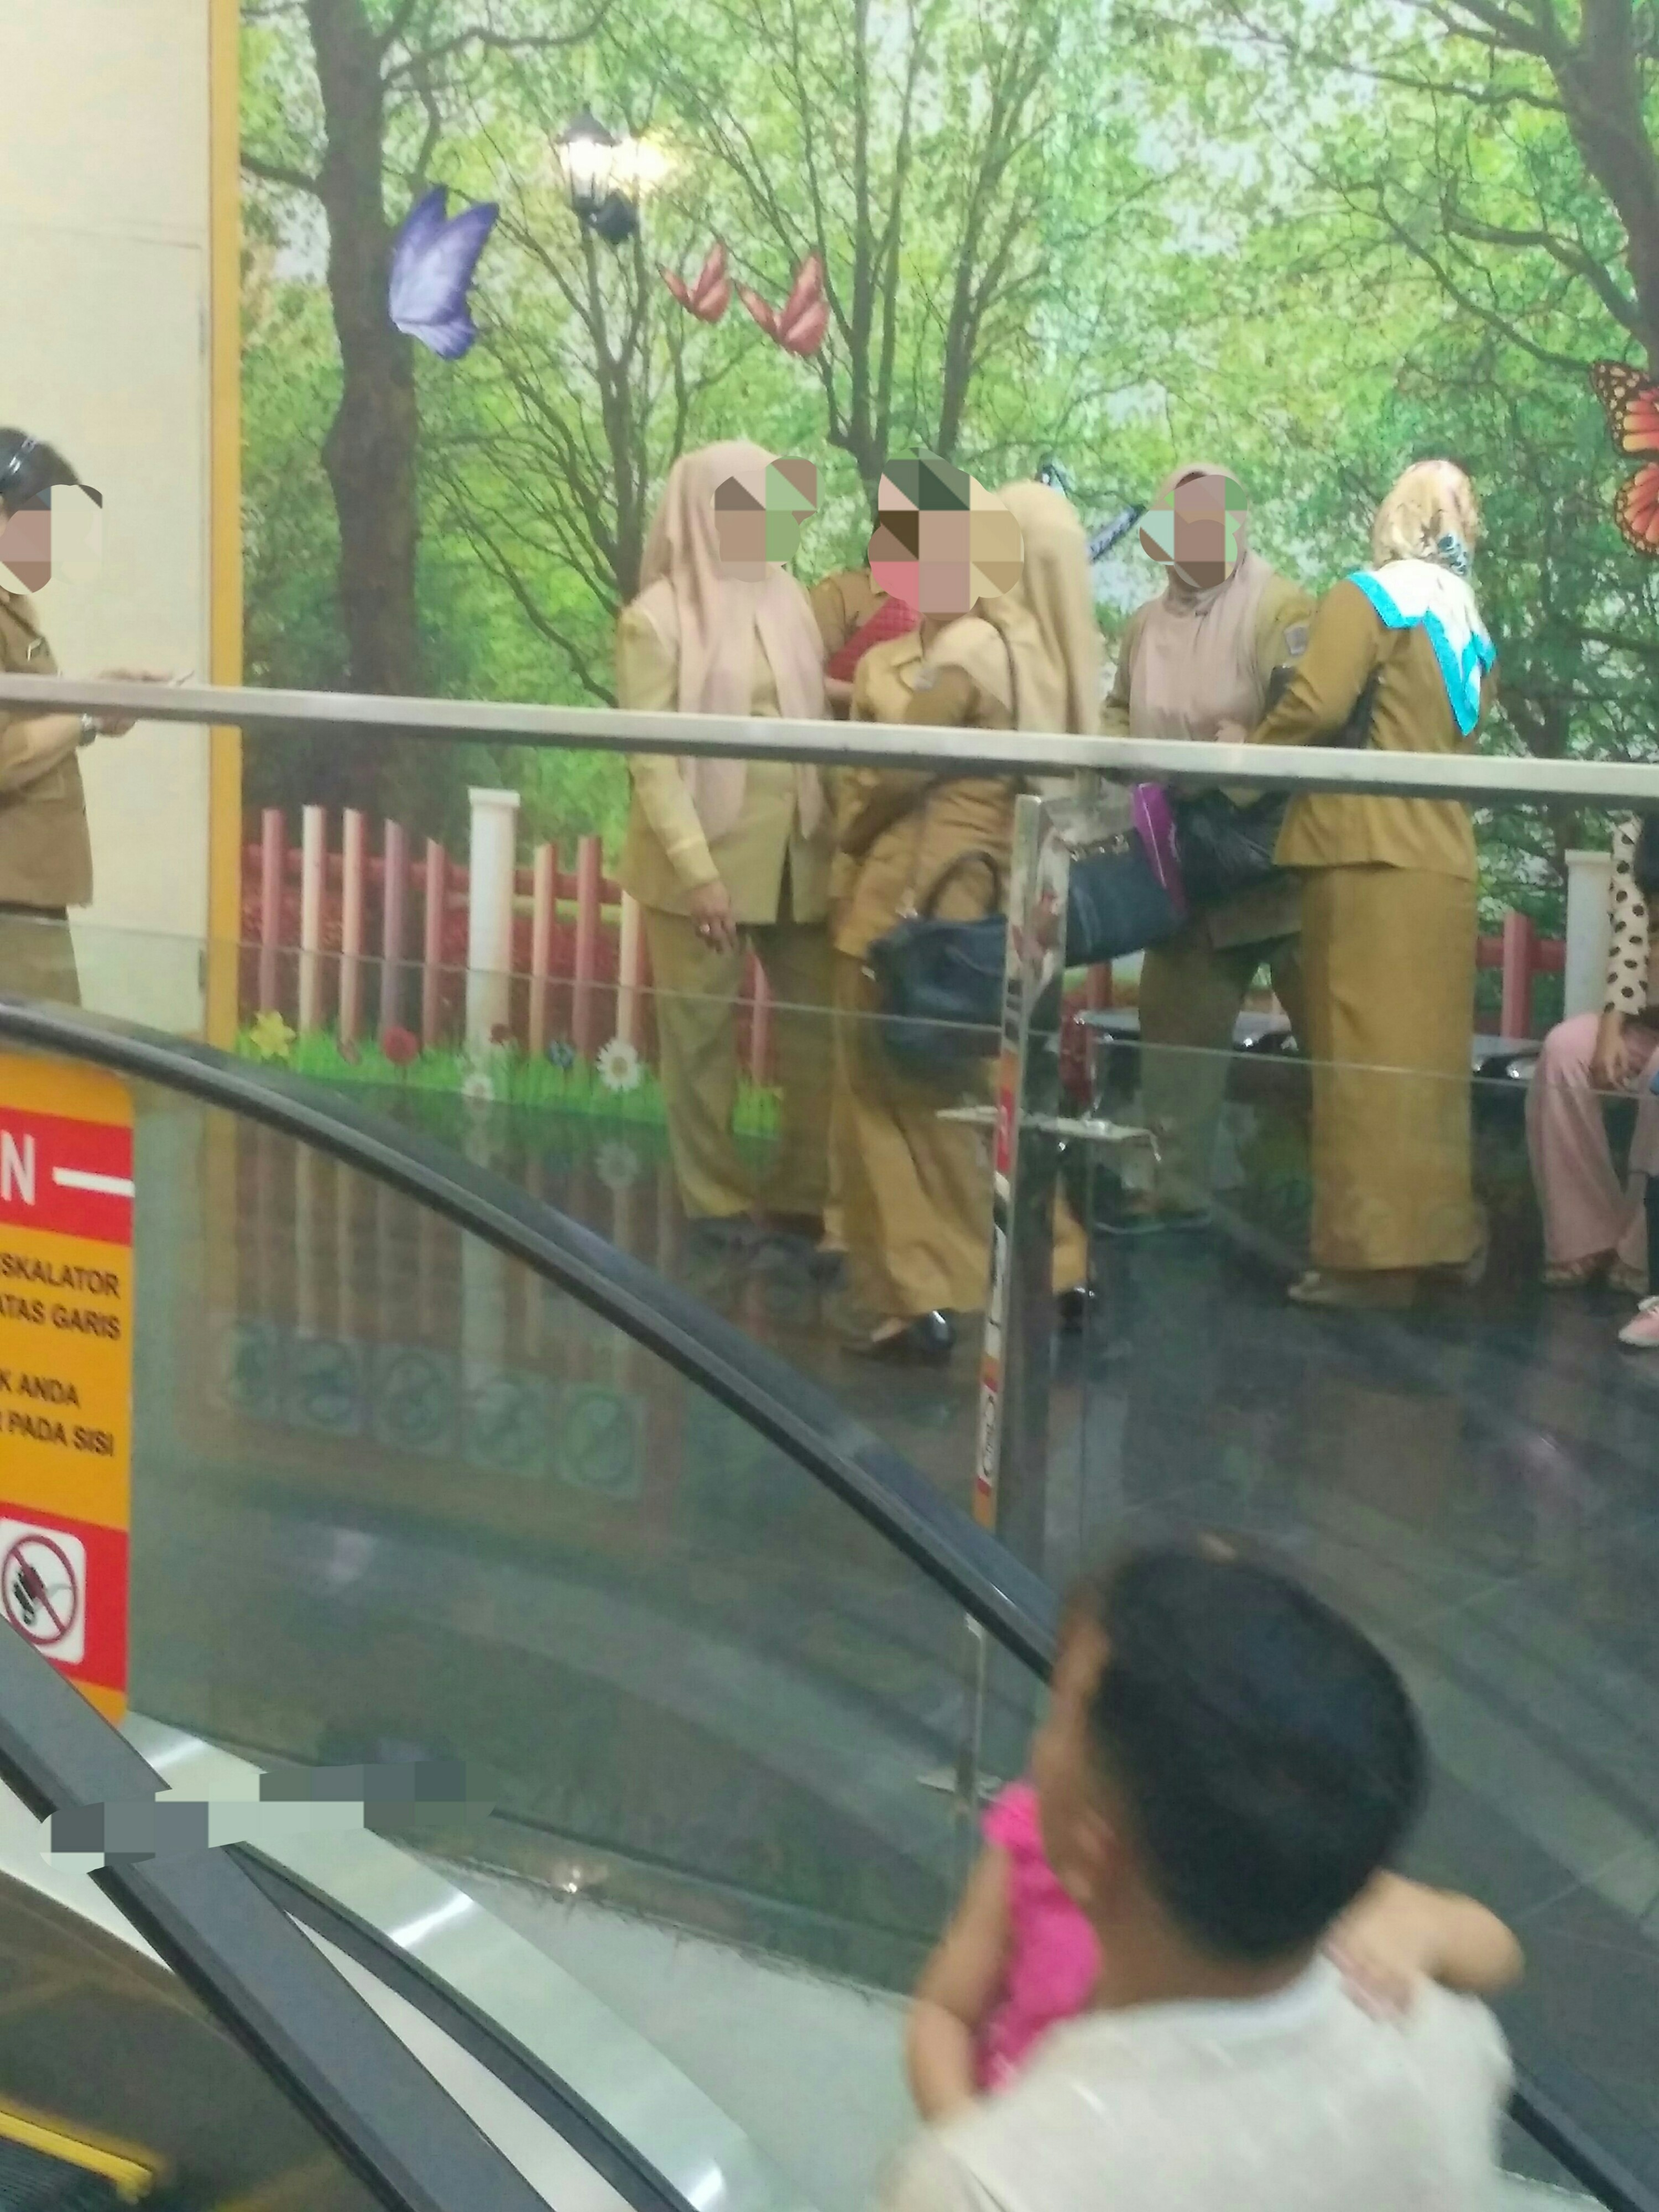 Bah, Masih Dalam Jam Kerja, PNS/ASN Kota Binjai Malah 'Gentayangan' Di
Mall.